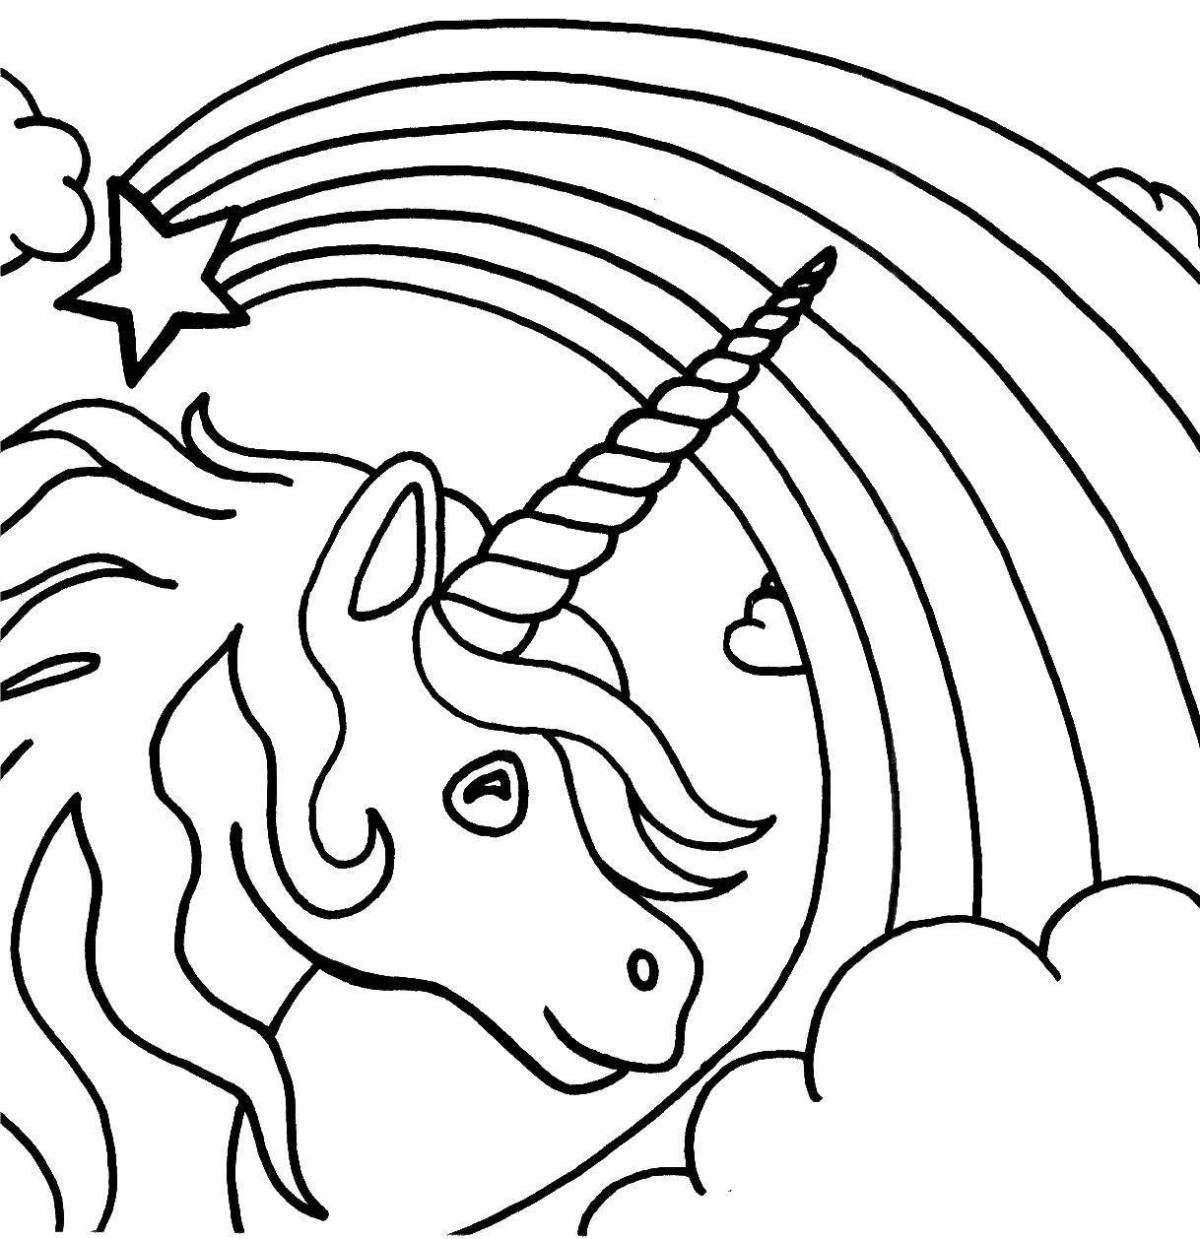 A fun unicorn coloring book for kids